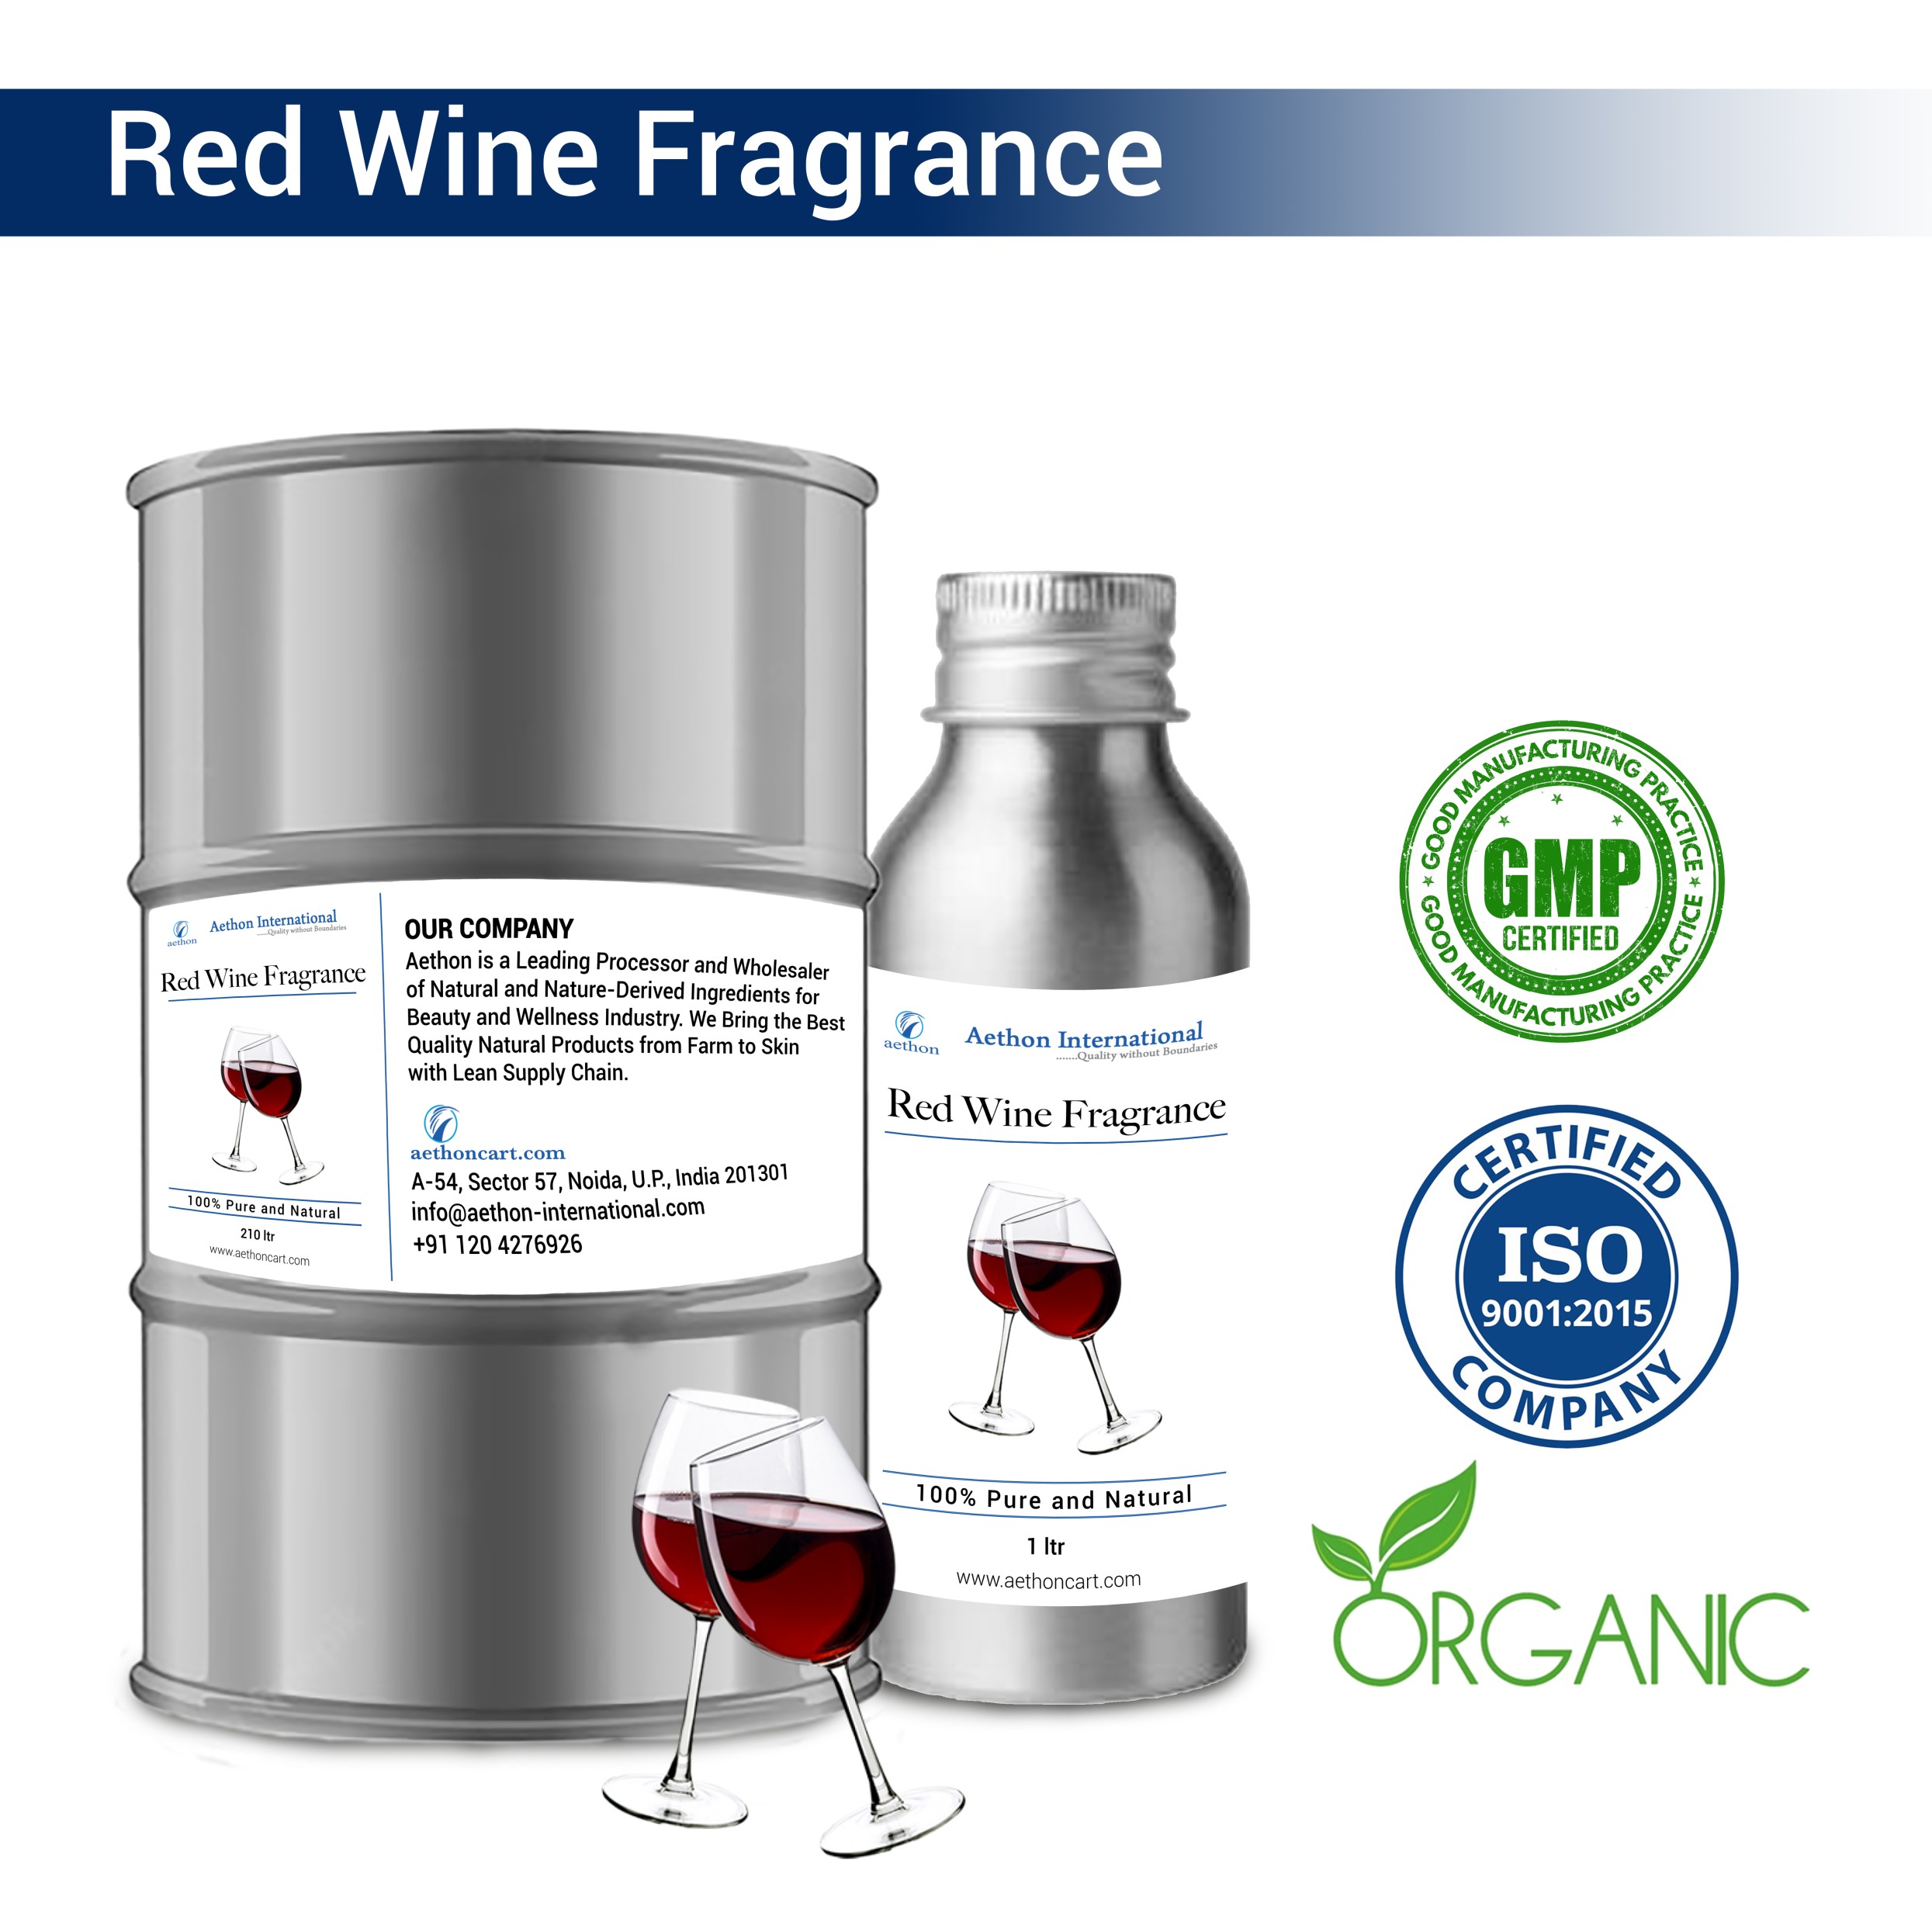 Red Wine Fragrance